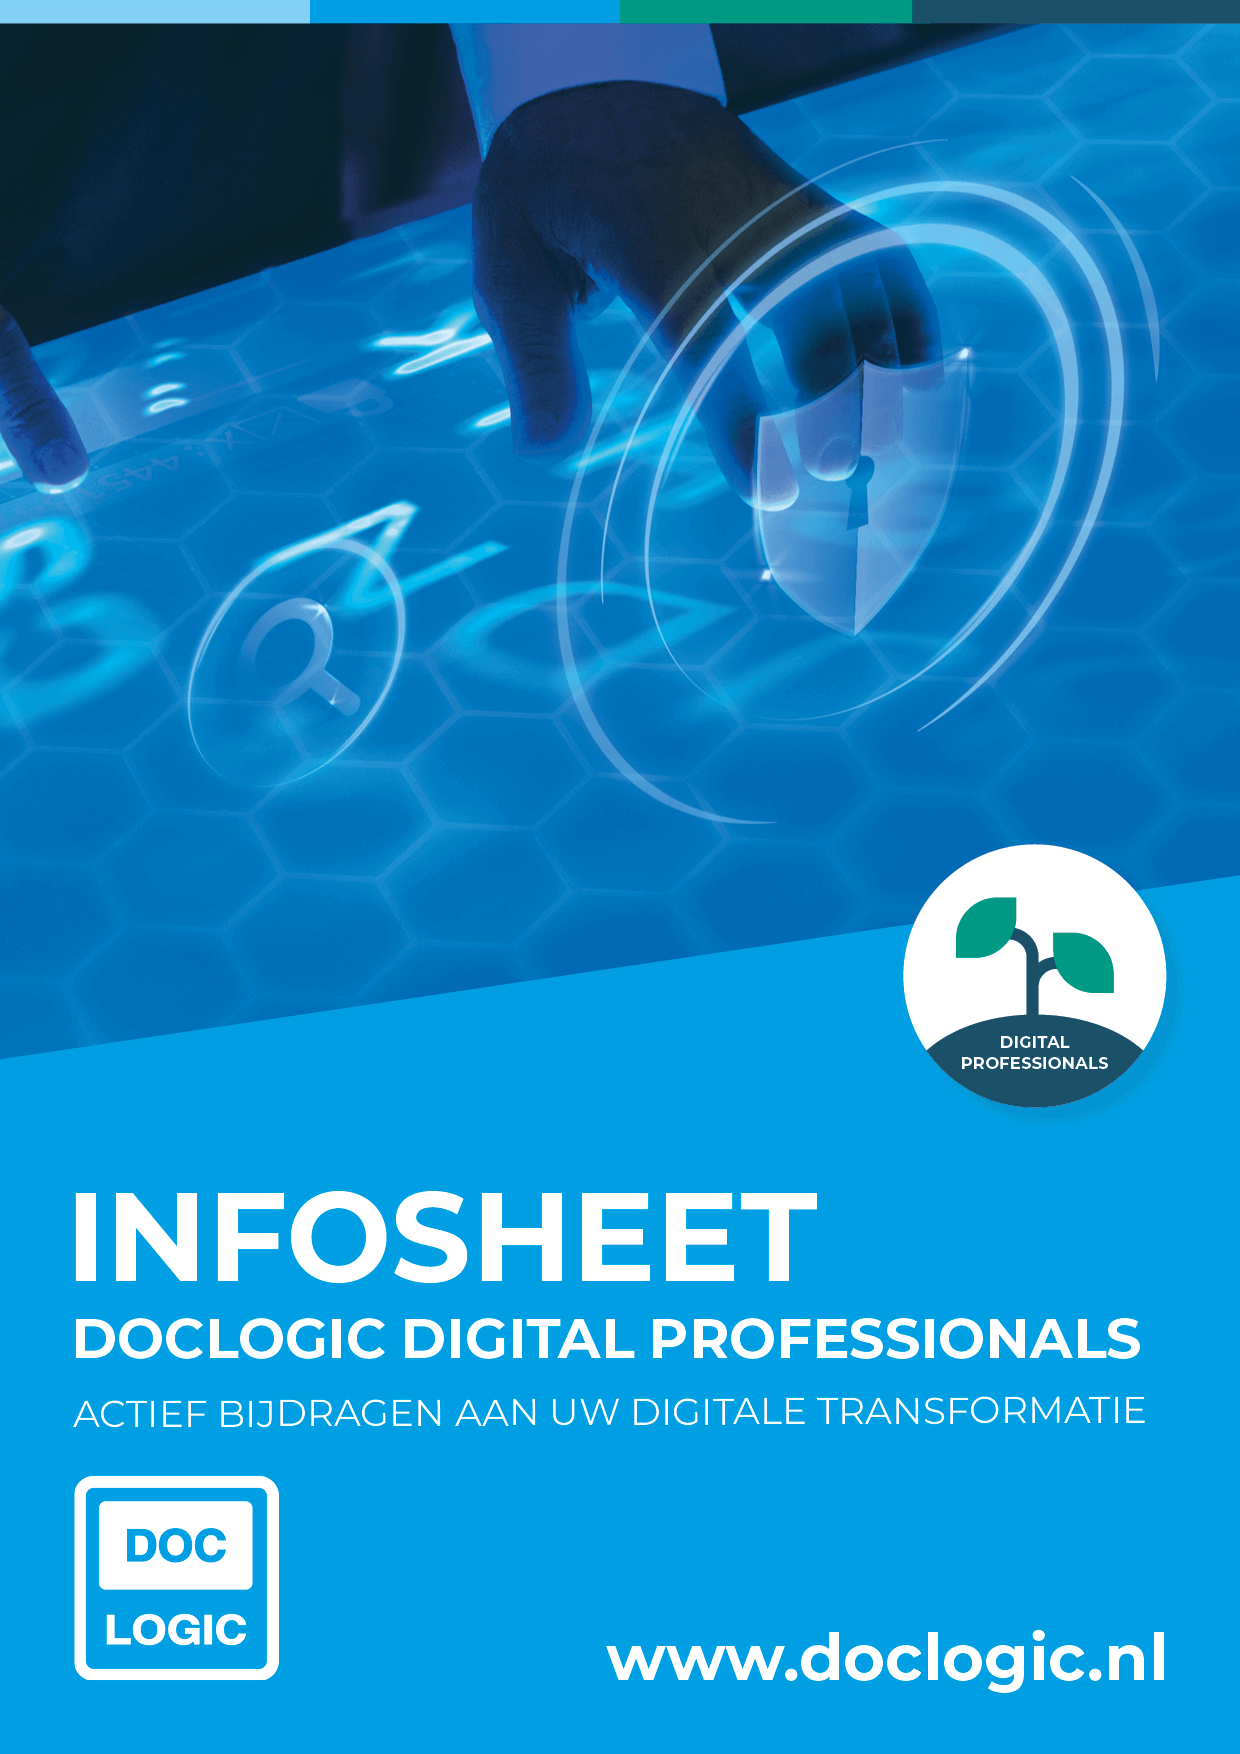 Infosheet Digital Professionals